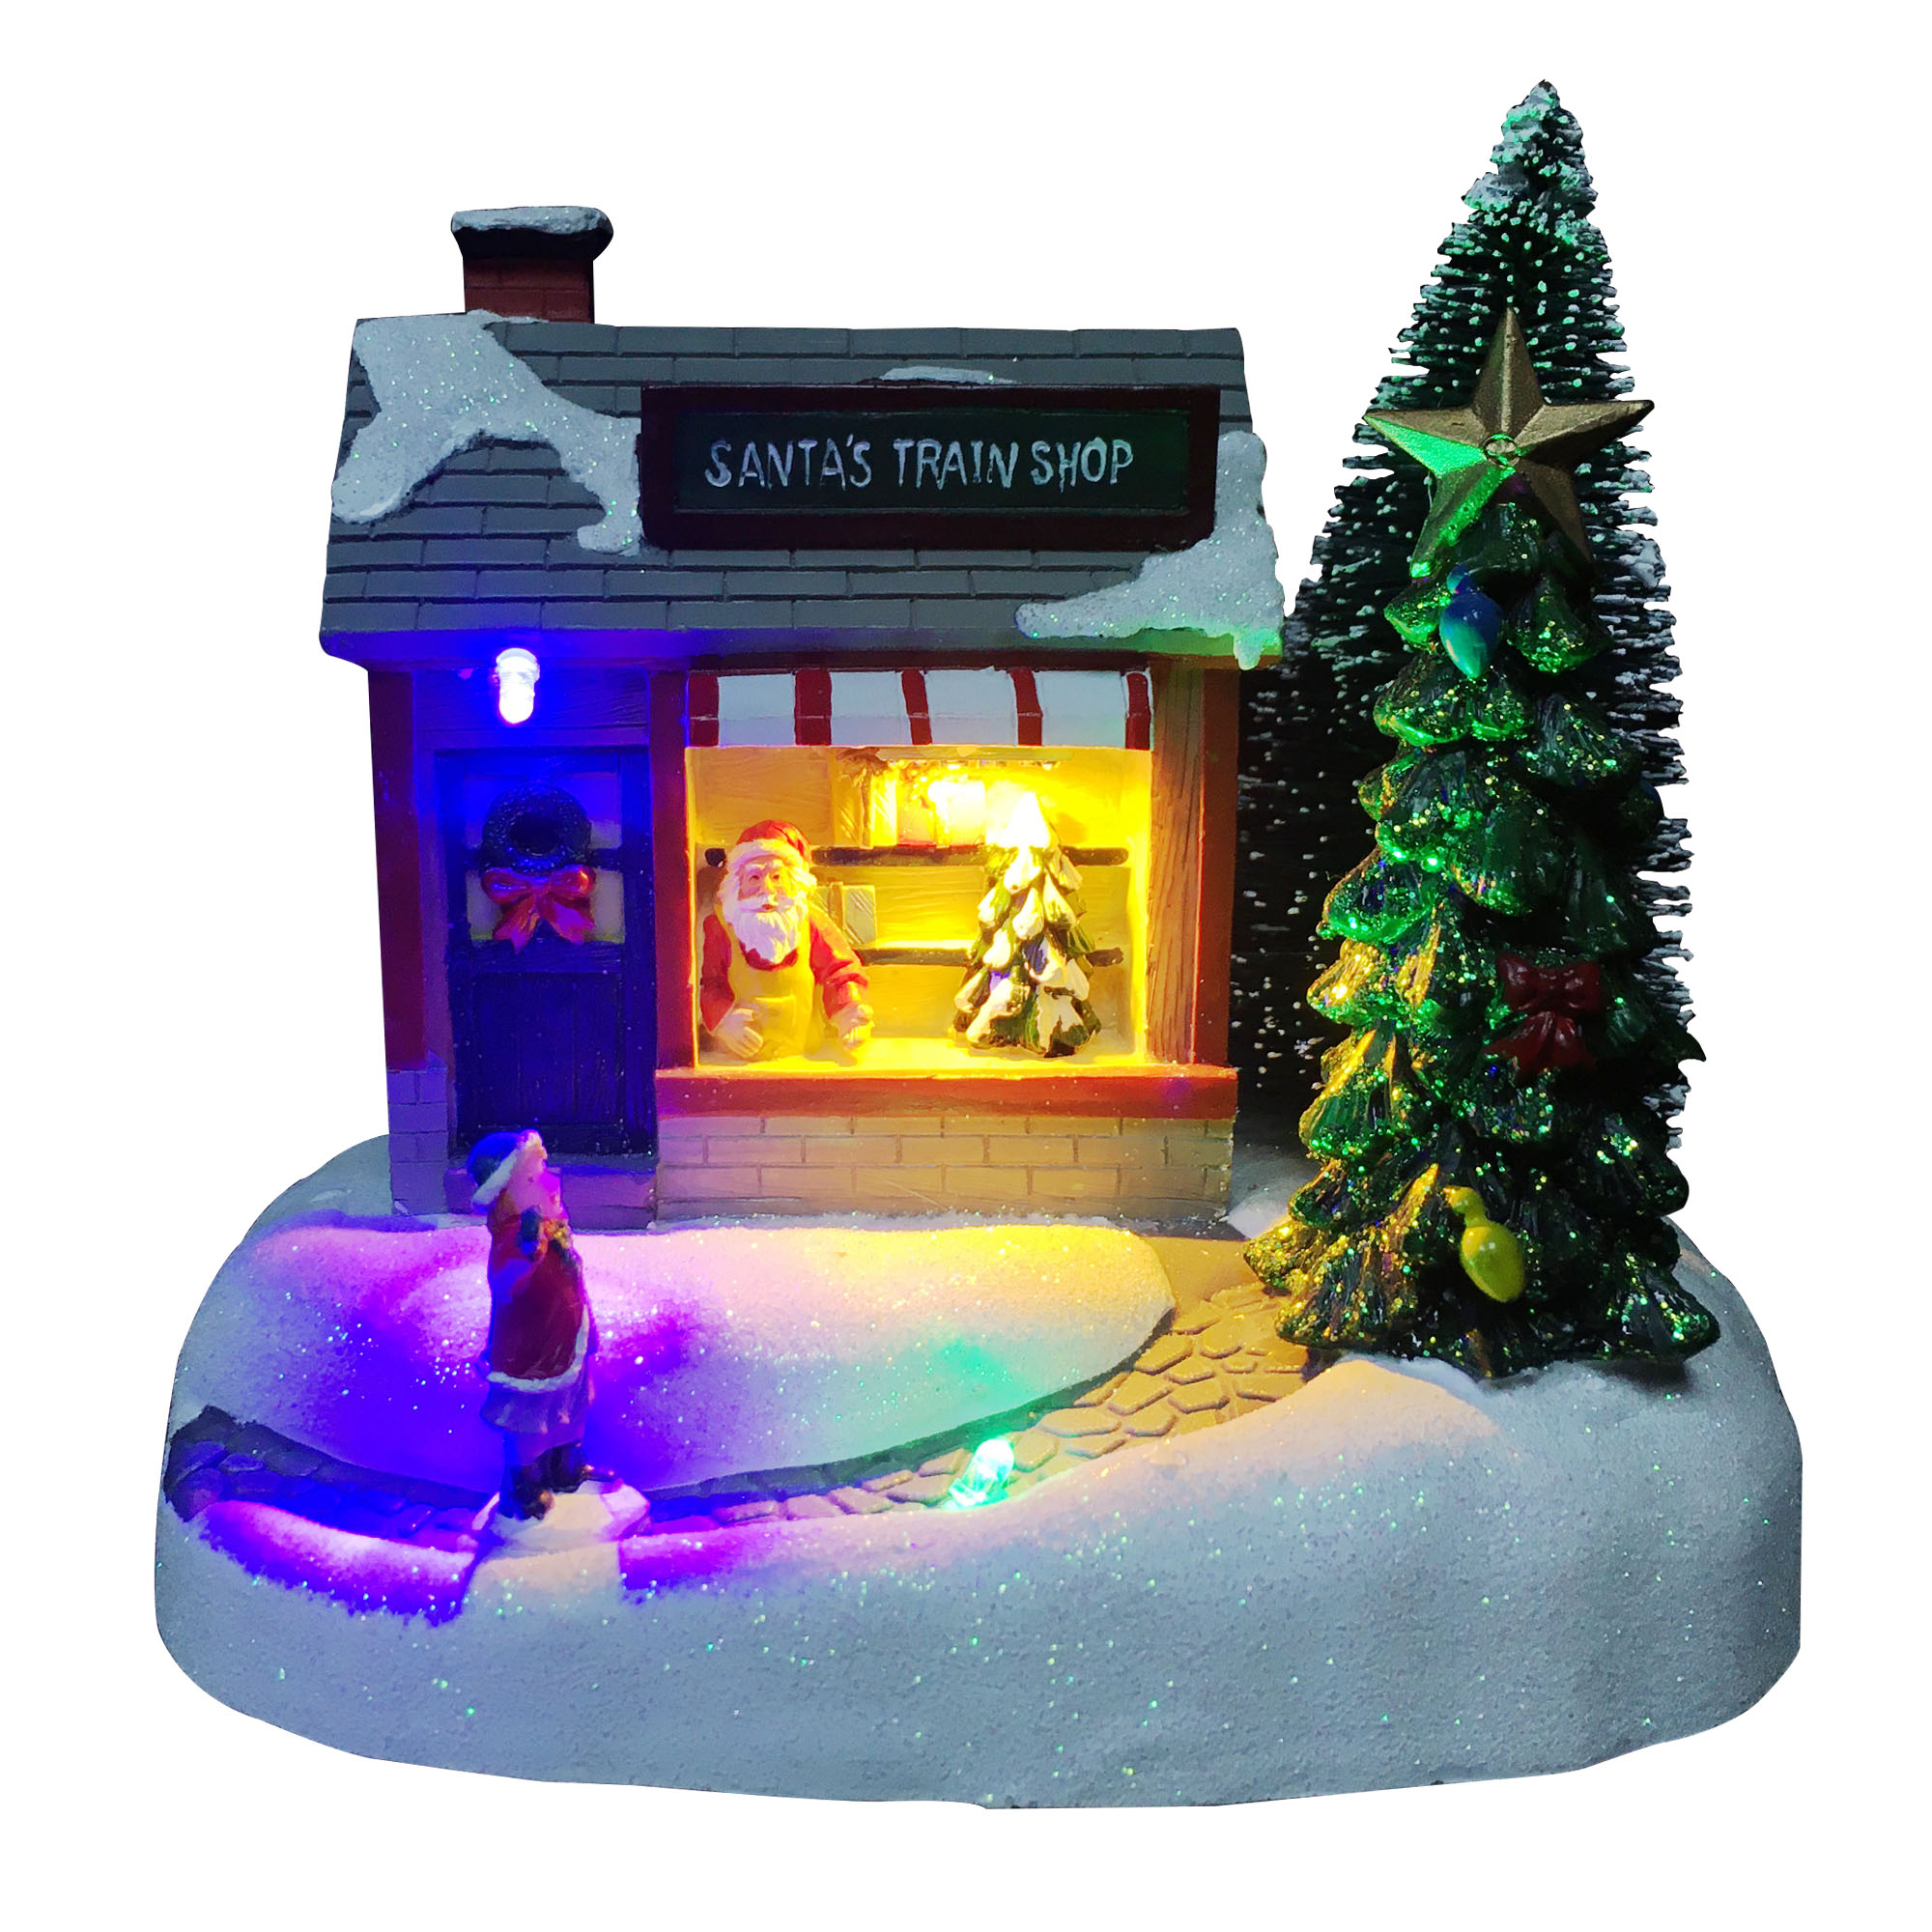 Best quality White Christmas Village Set - Melody colorful Xmas village Christmas Decoration Santa’s Train Shop scene led lighted Christmas house – Melody